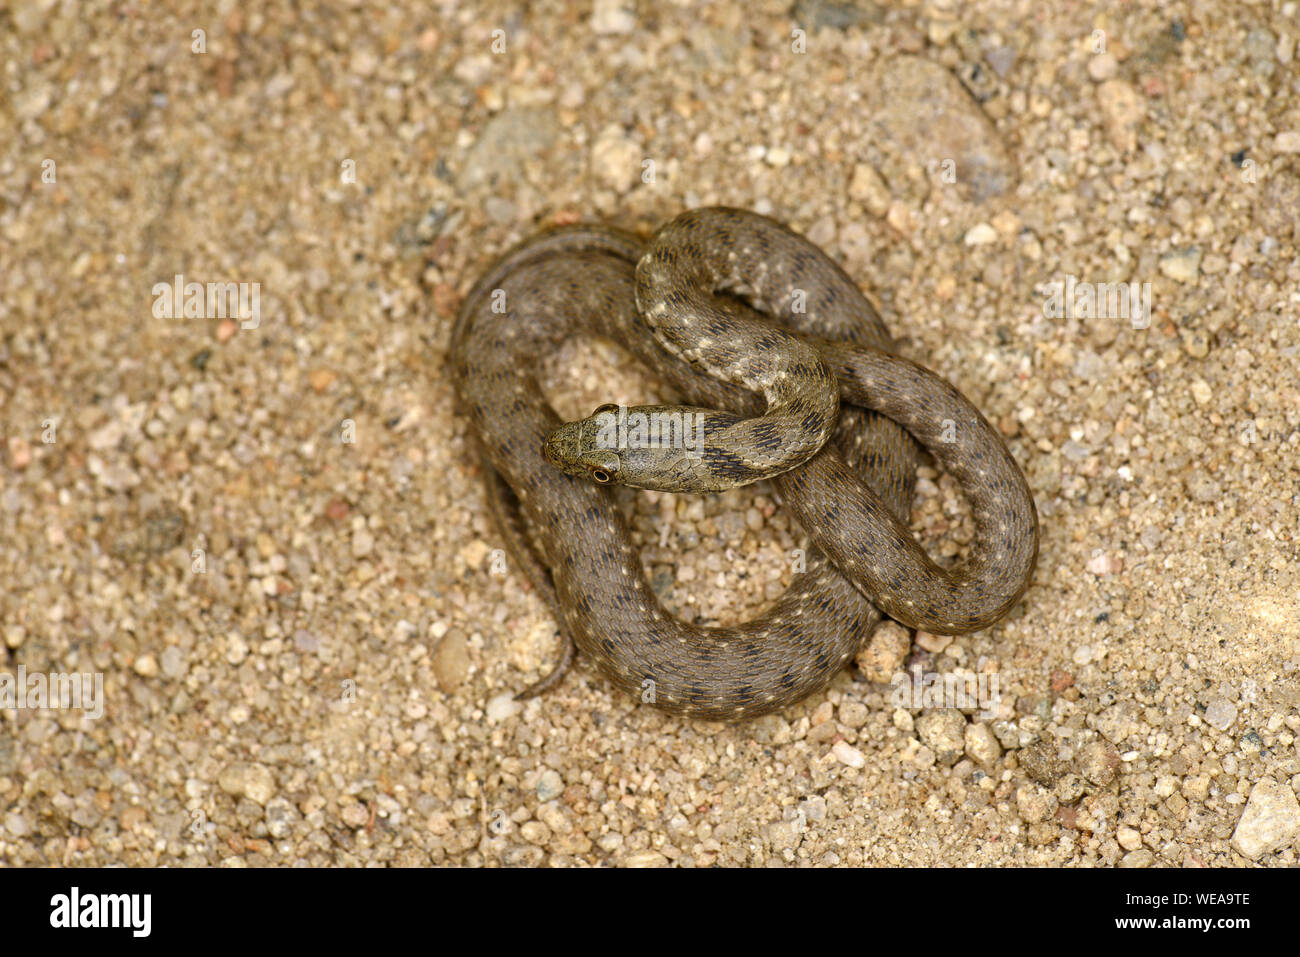 Dice Snake (Natrix tessellata) resting on sand, curled up, Bulgaria, April Stock Photo